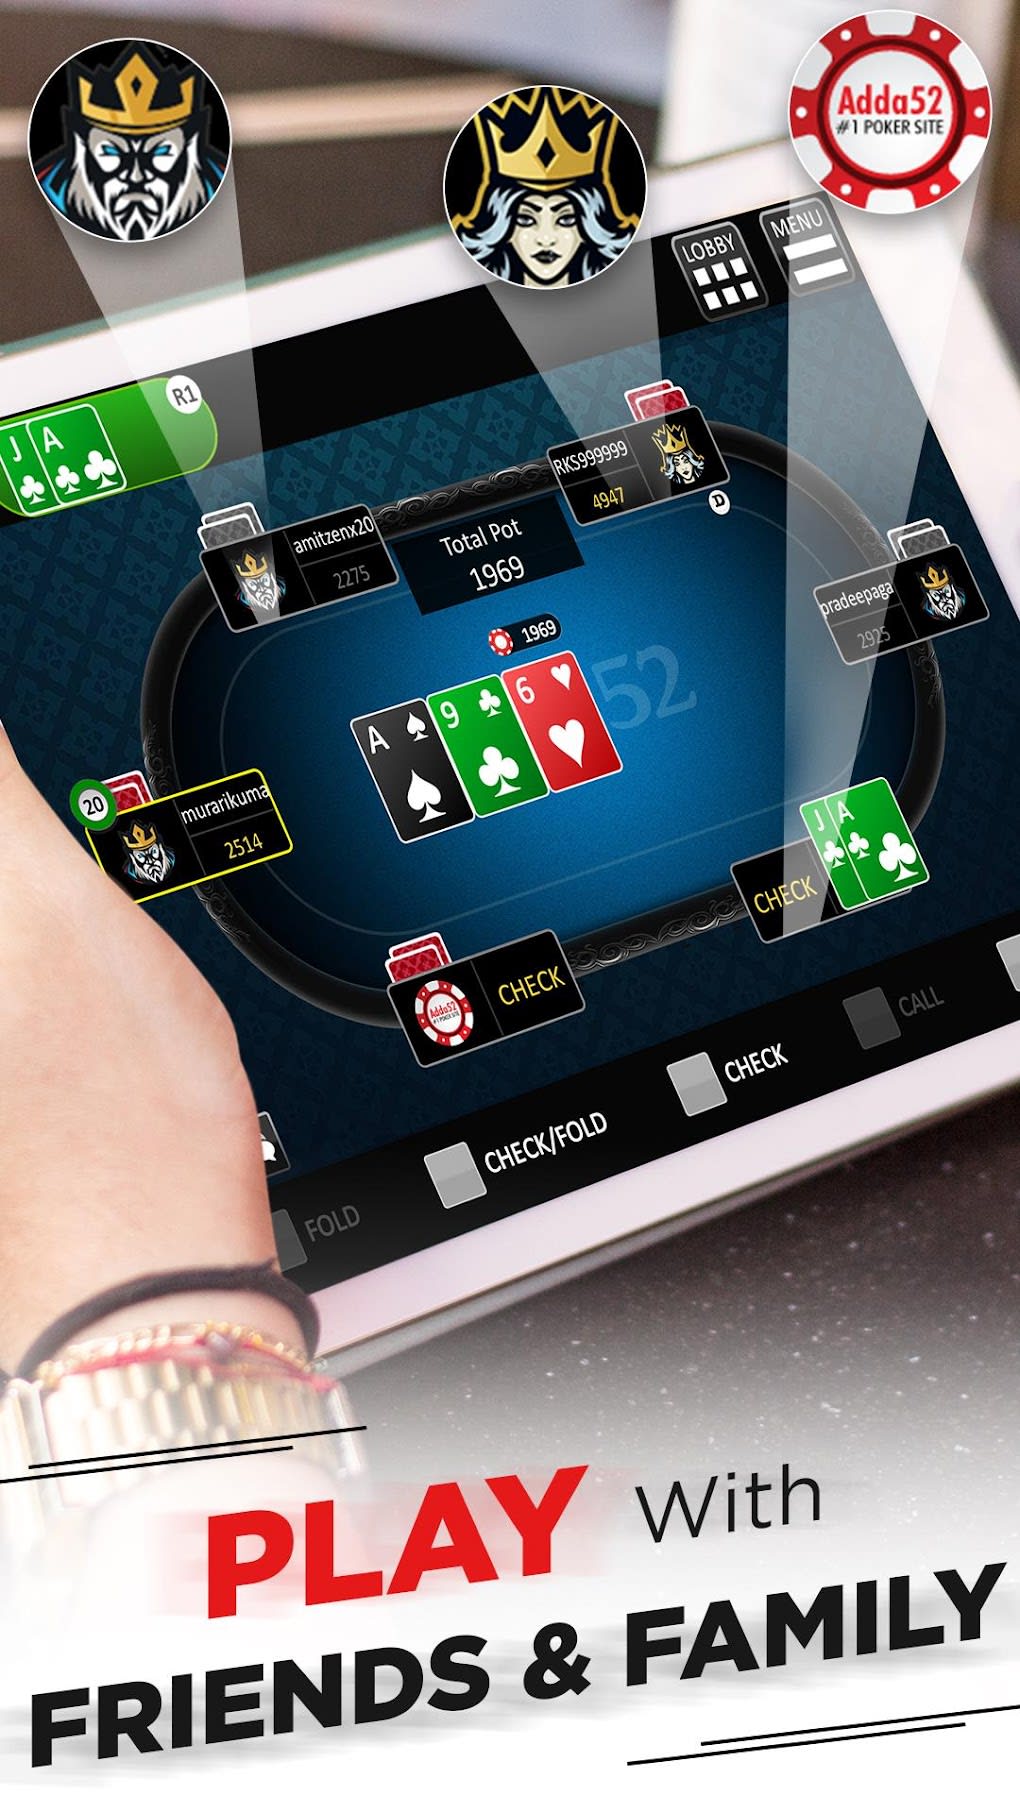 Online Poker Games - Play Poker Online at Adda52